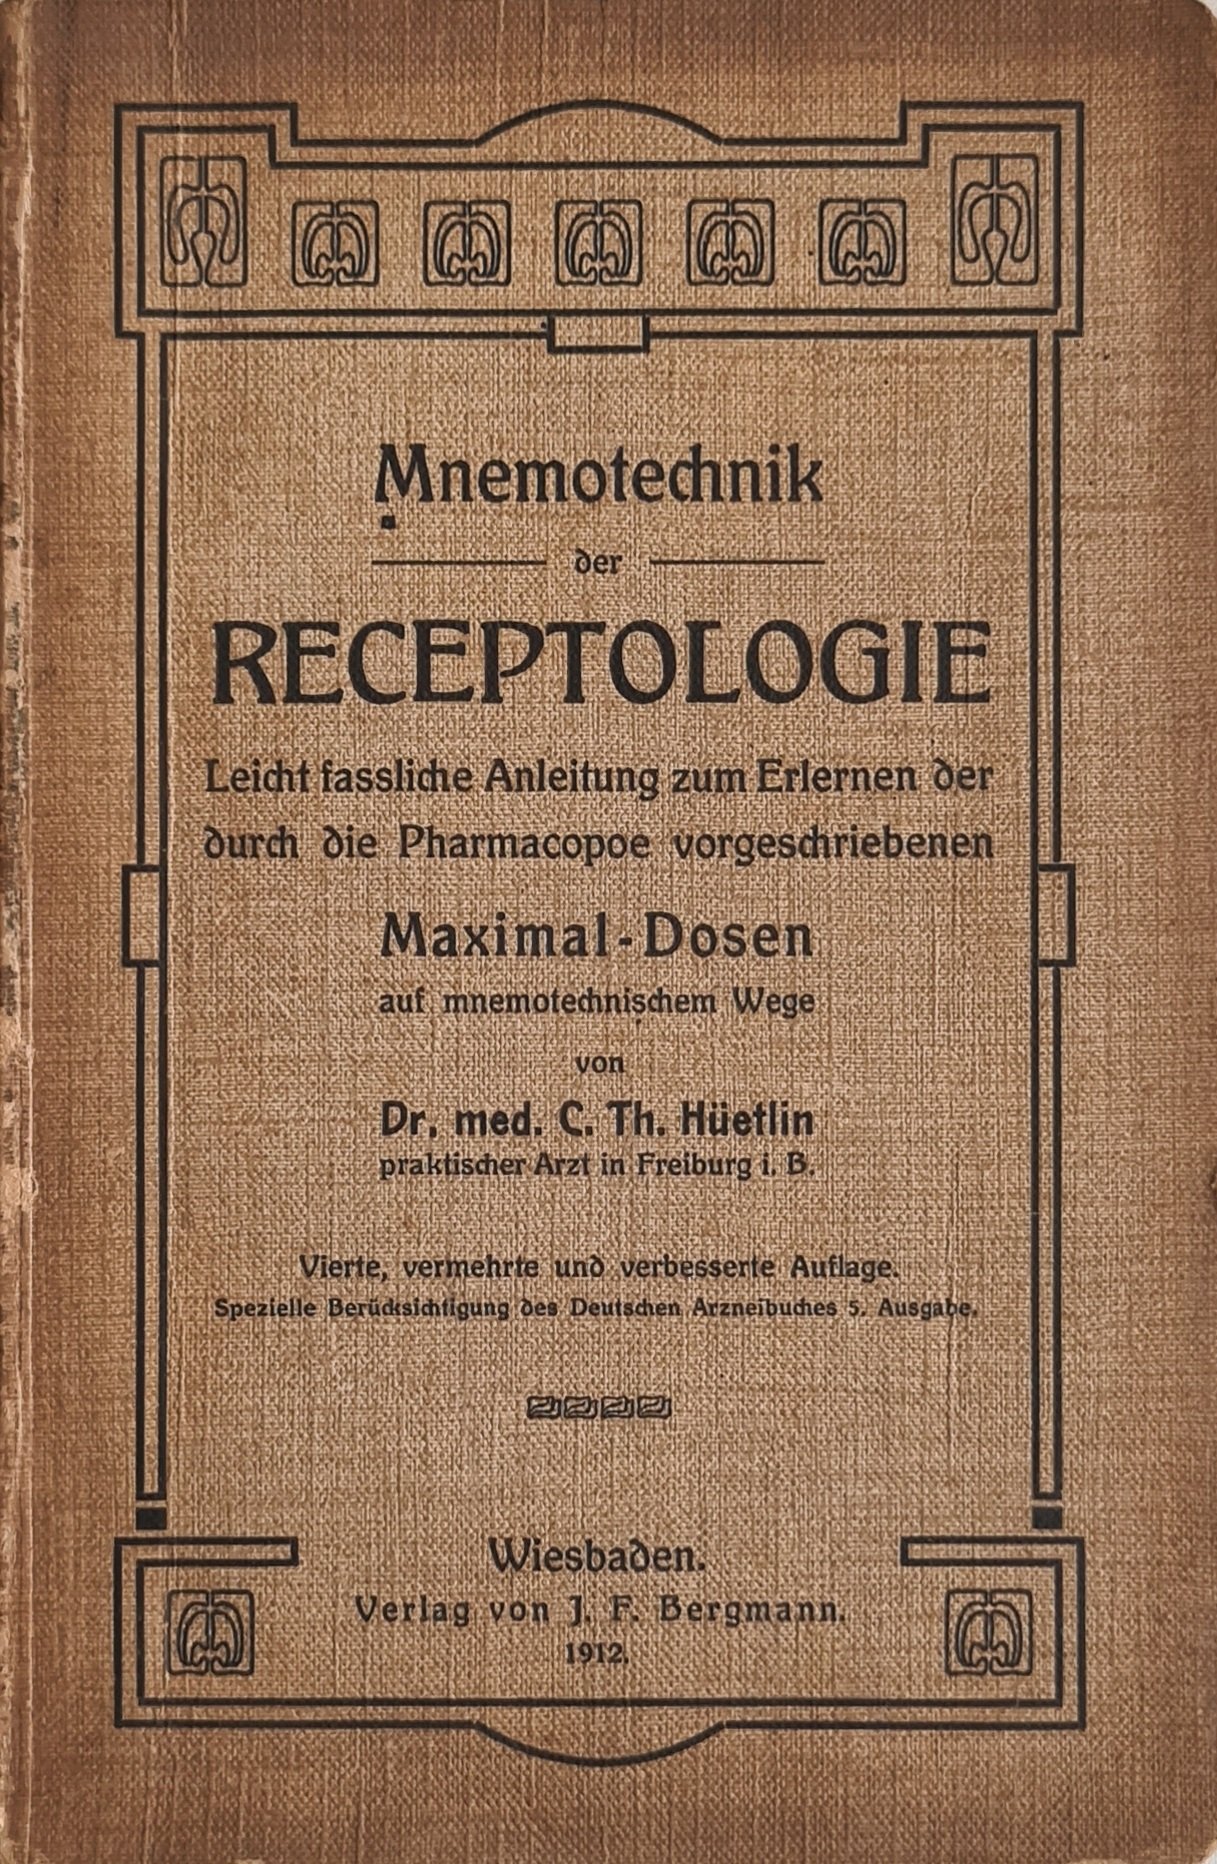 Mnemotechnik der Receptologie (Krankenhausmuseum Bielefeld e.V. CC BY-NC-SA)